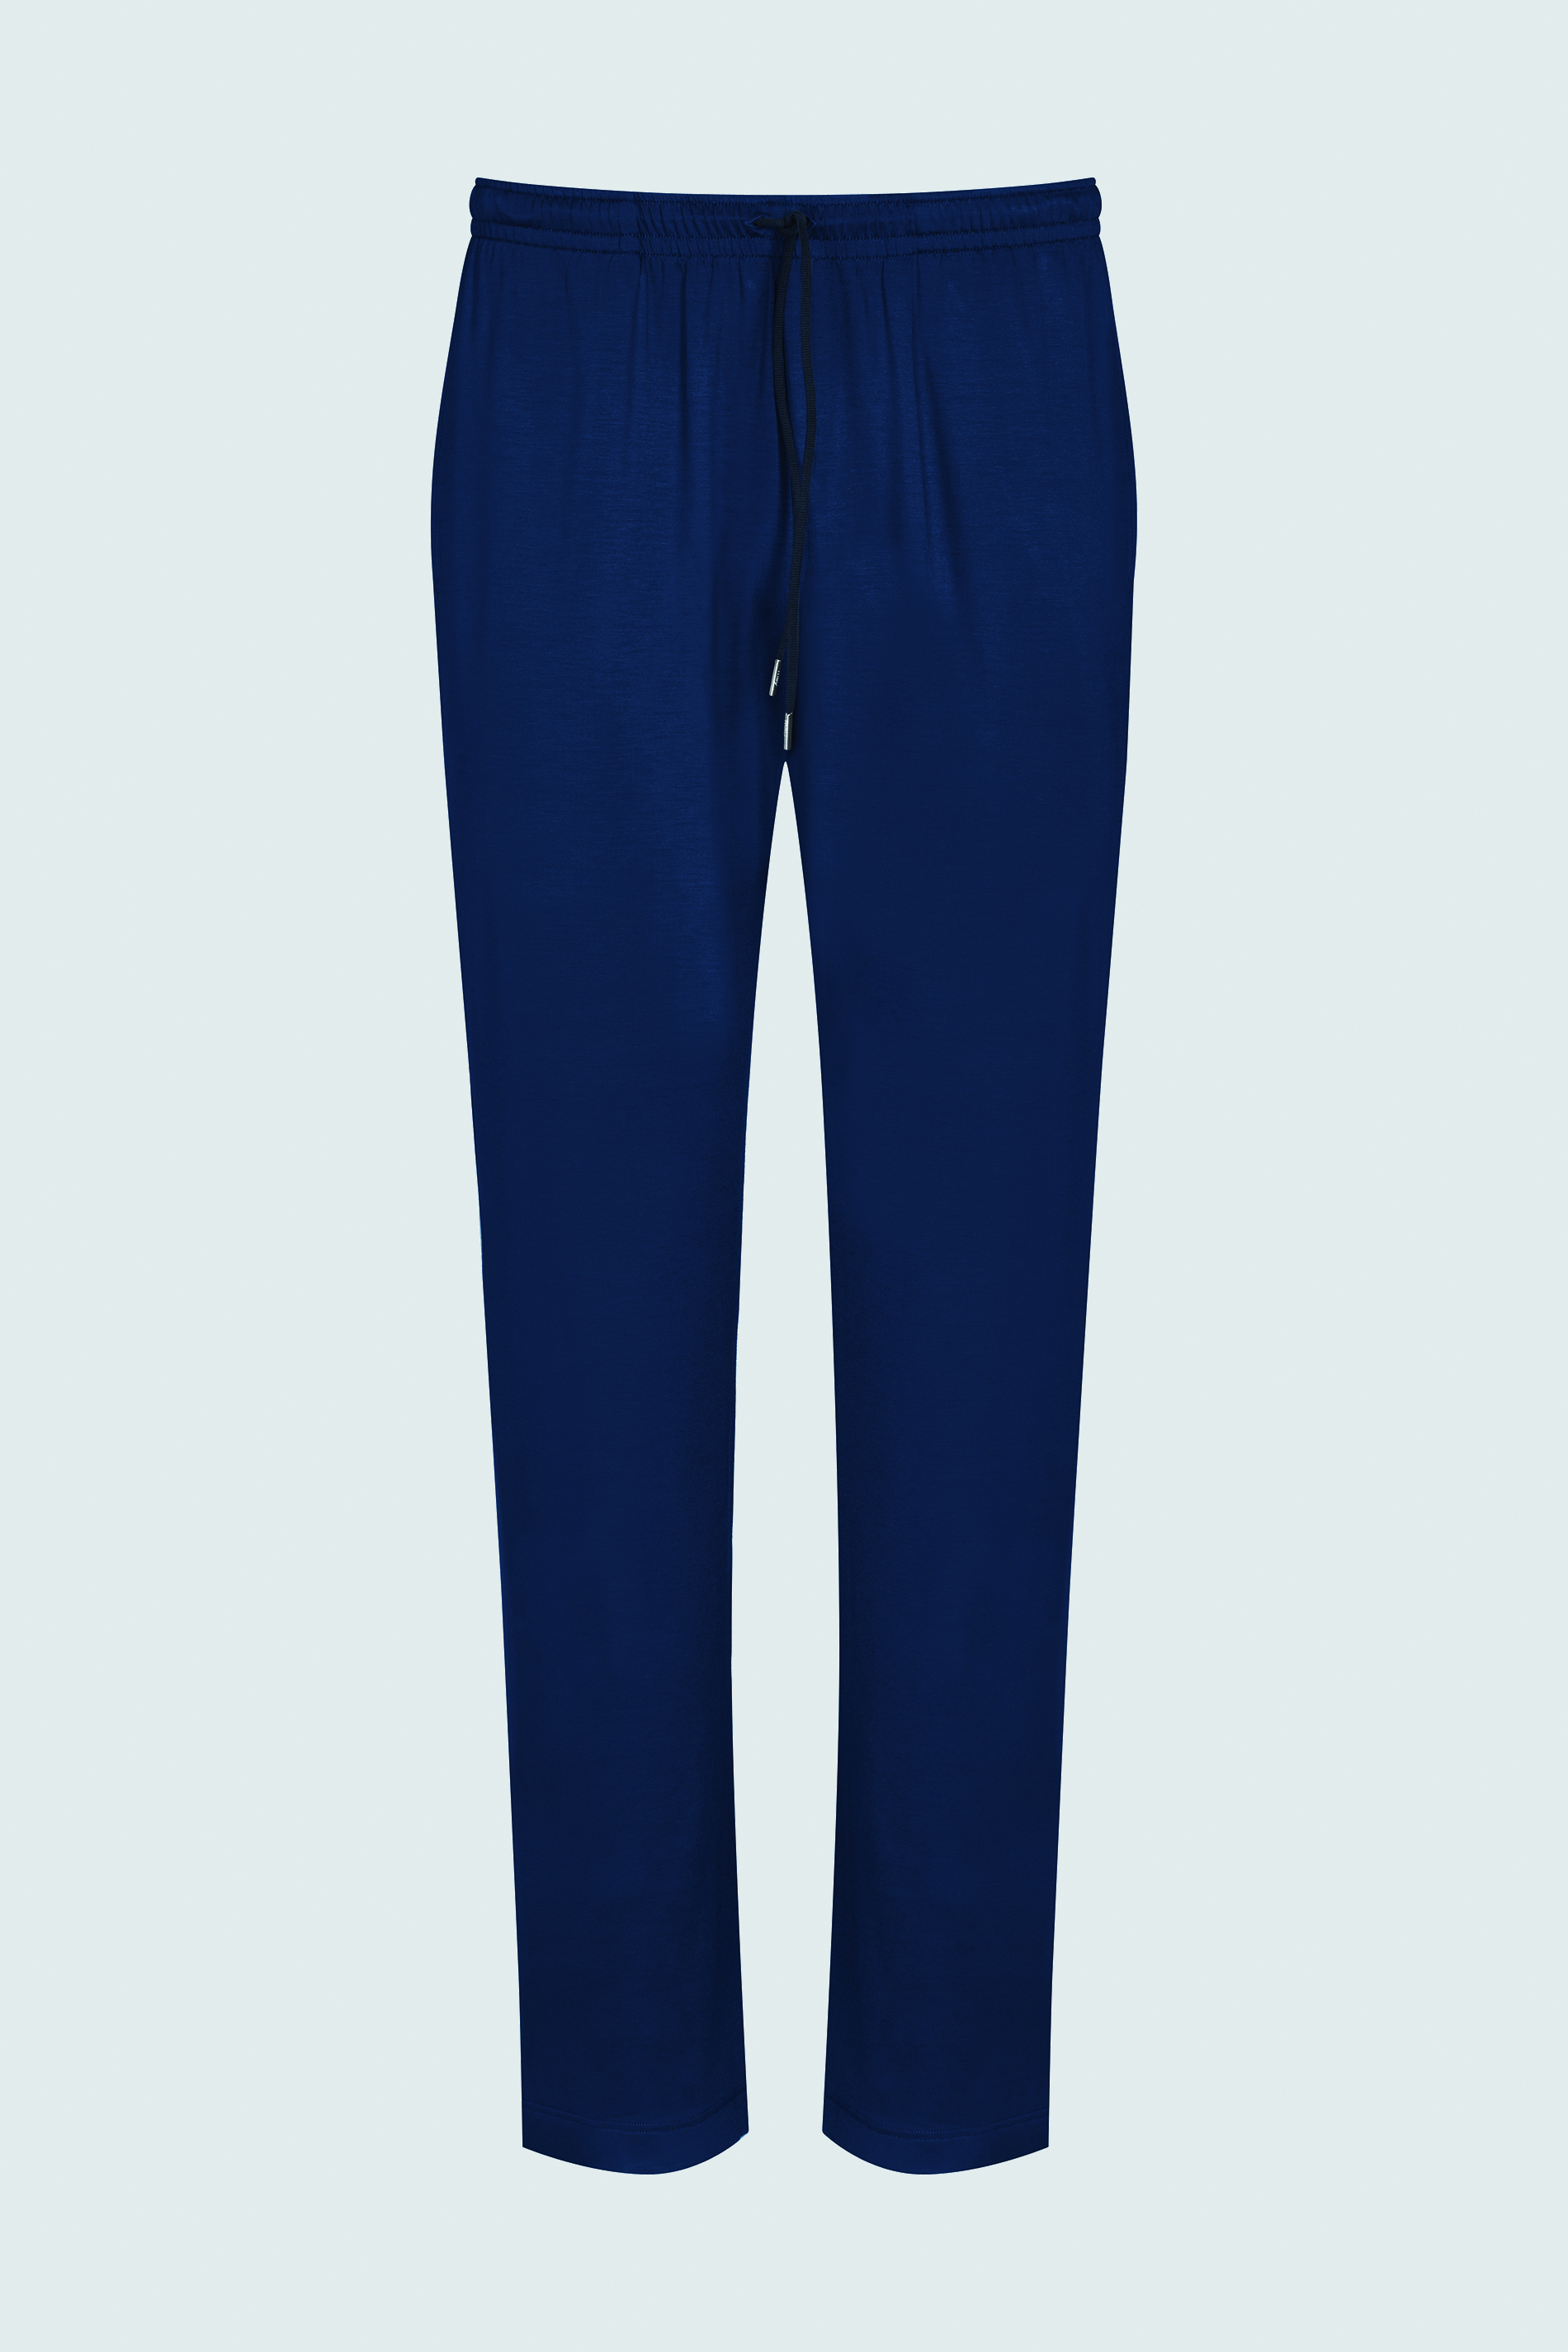 Long pants Yacht Blue Serie Jefferson Modal Cut Out | mey®